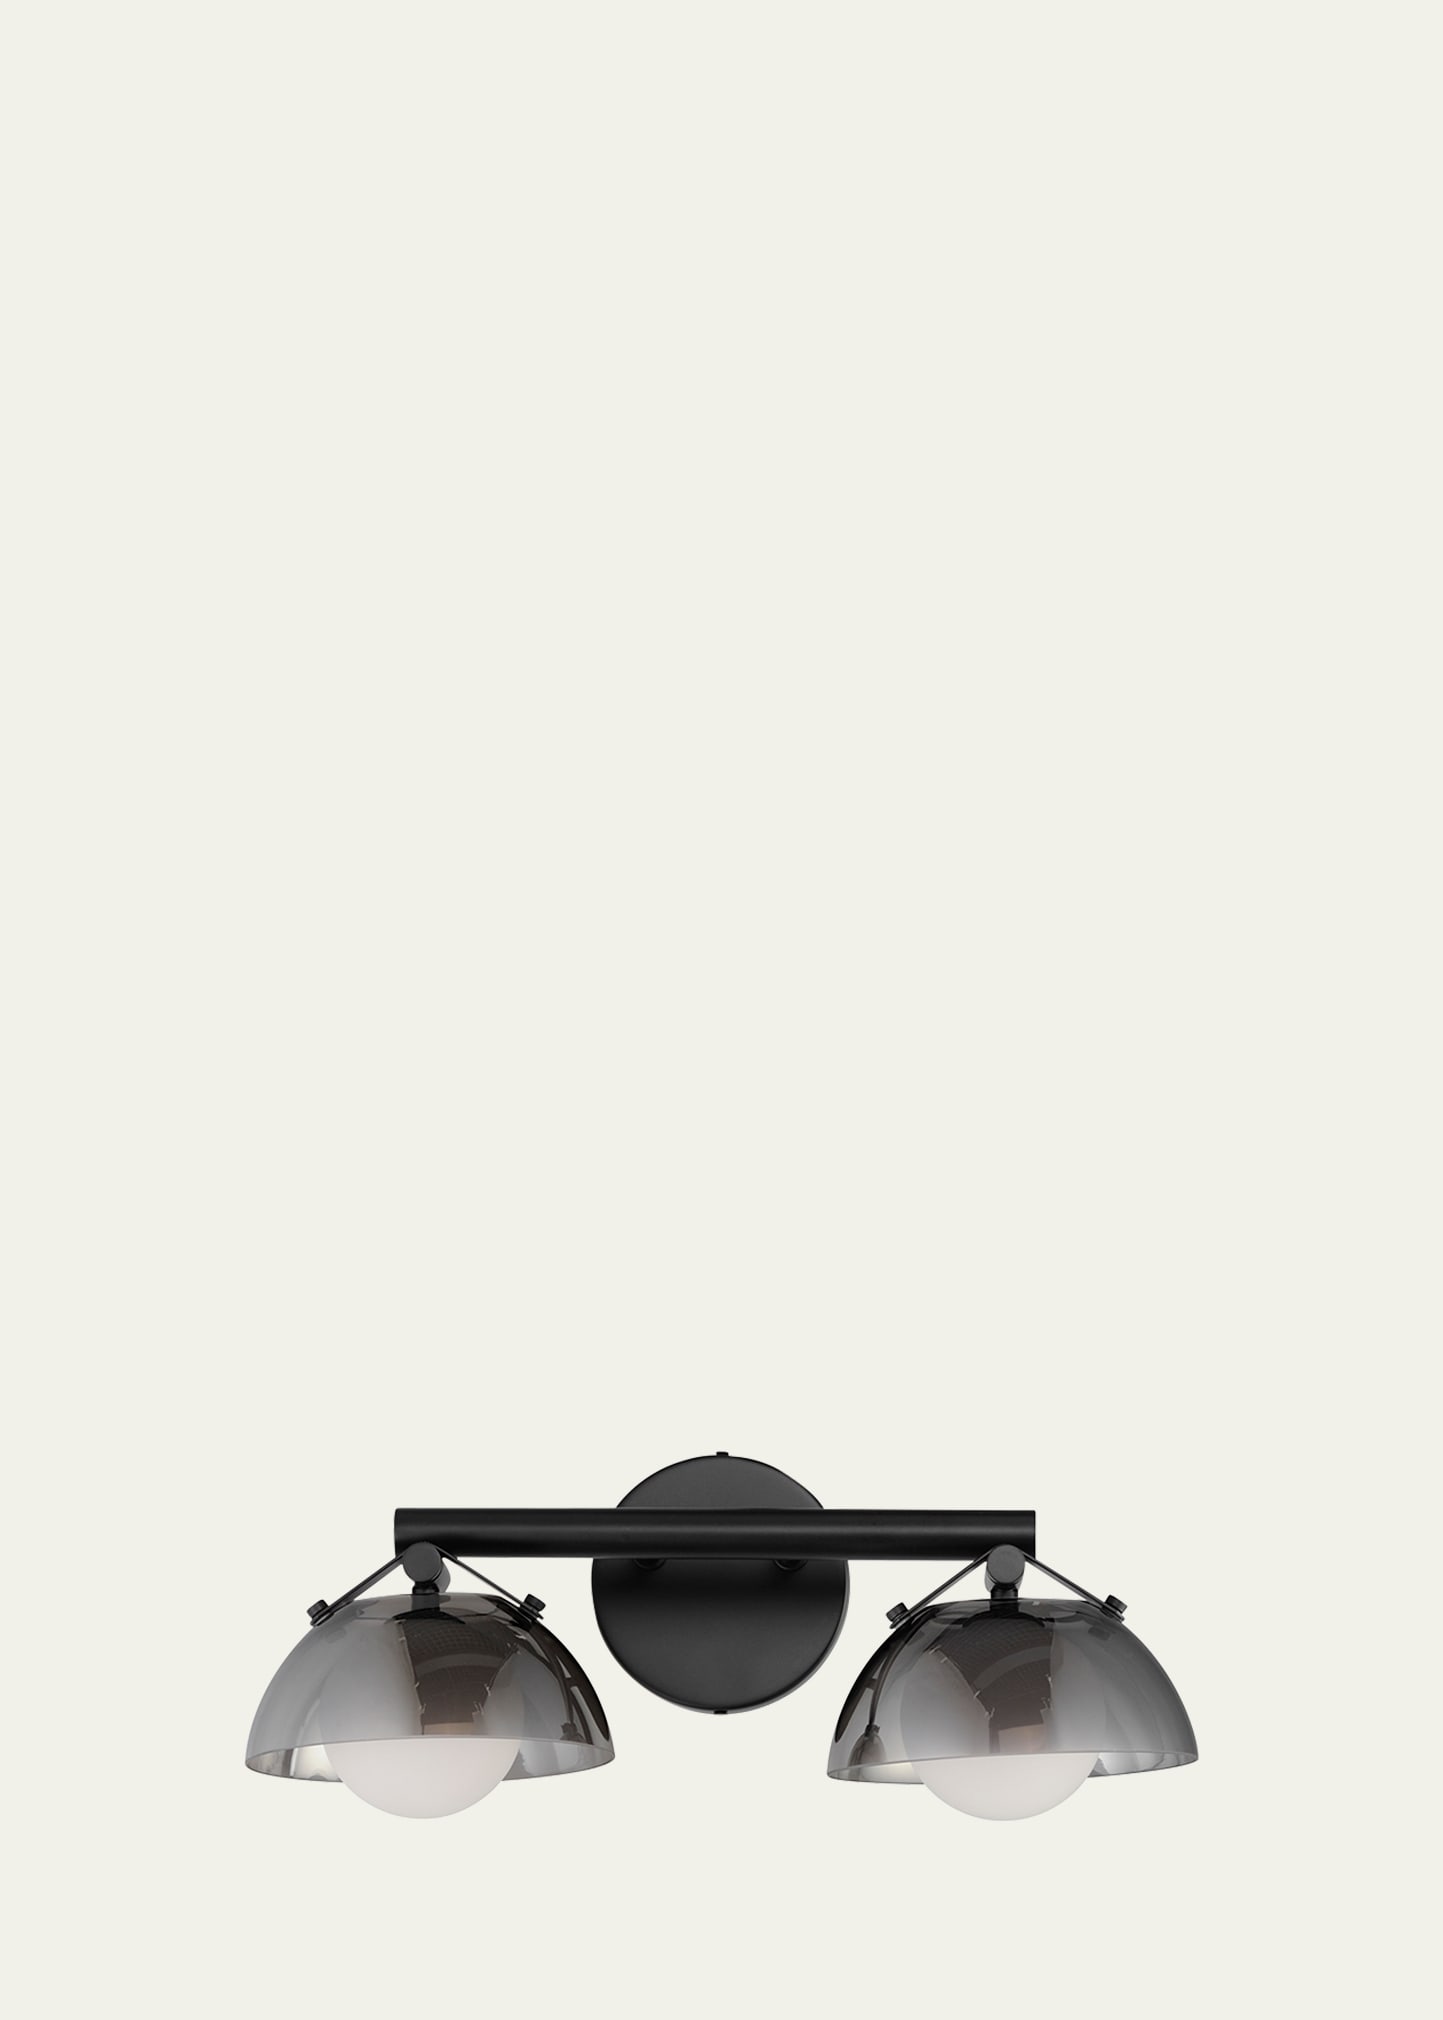 Studio M Mat Sanders Design From  Domain 2-light Wall Sconce - Smoke/brass In Black